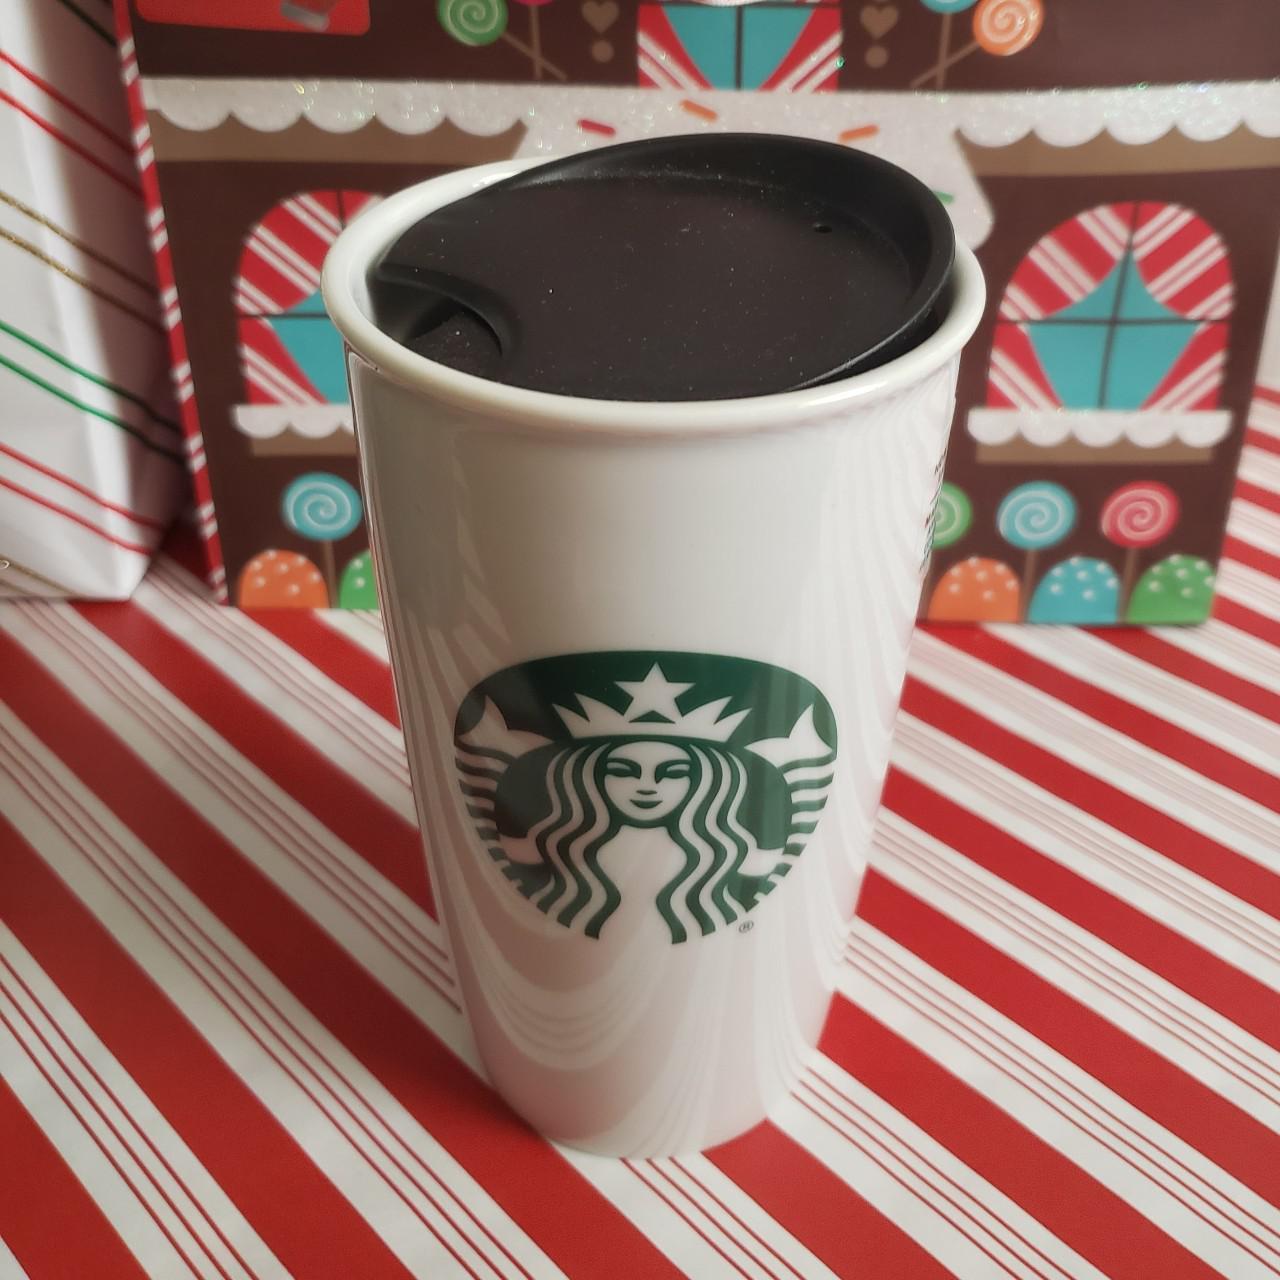 Product Image 2 - Starbucks 2016 ceramic plain tumbler